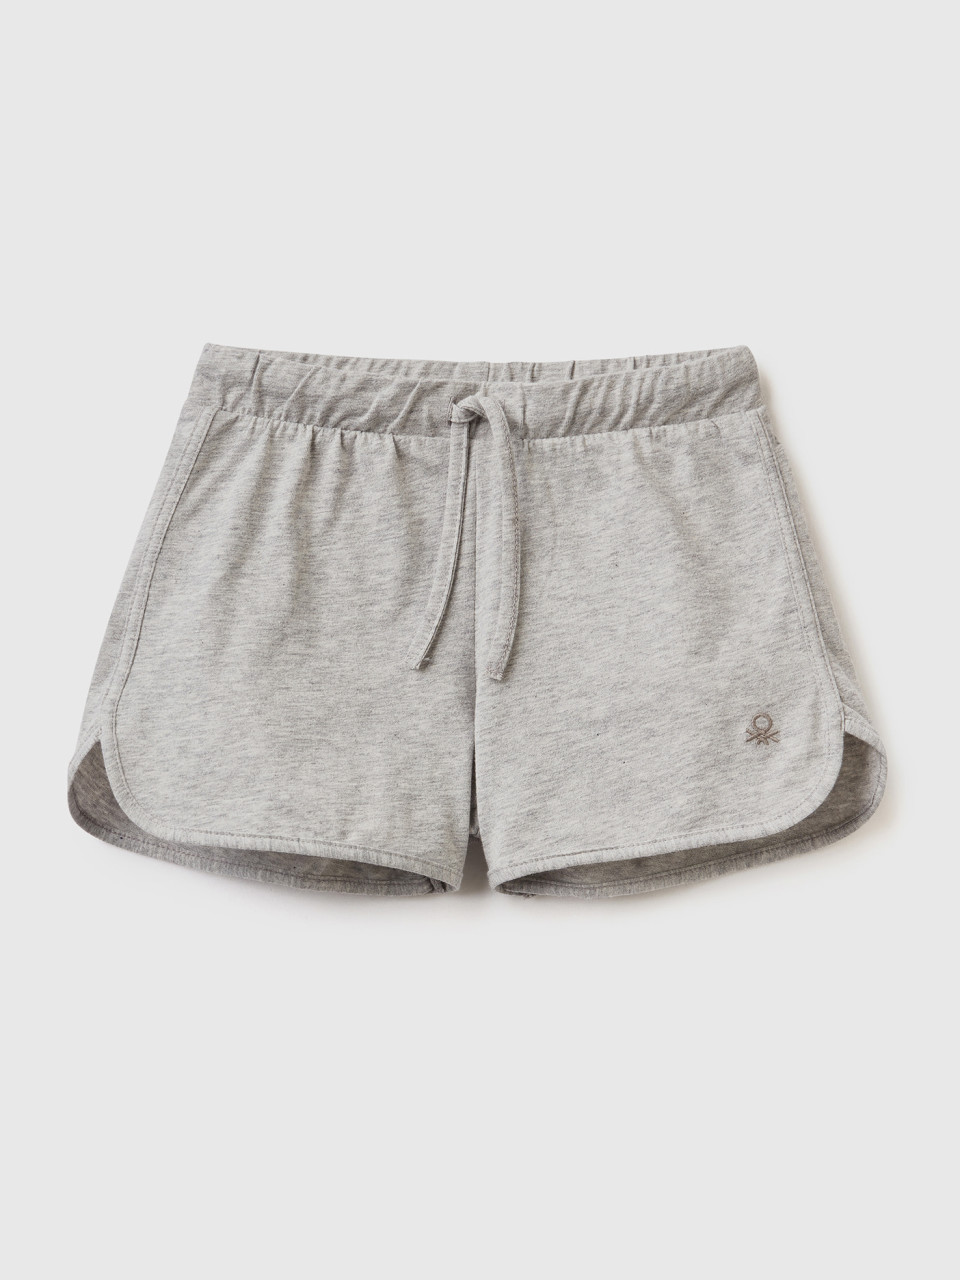 Benetton, Runner Style Shorts In Organic Cotton, Light Gray, Kids